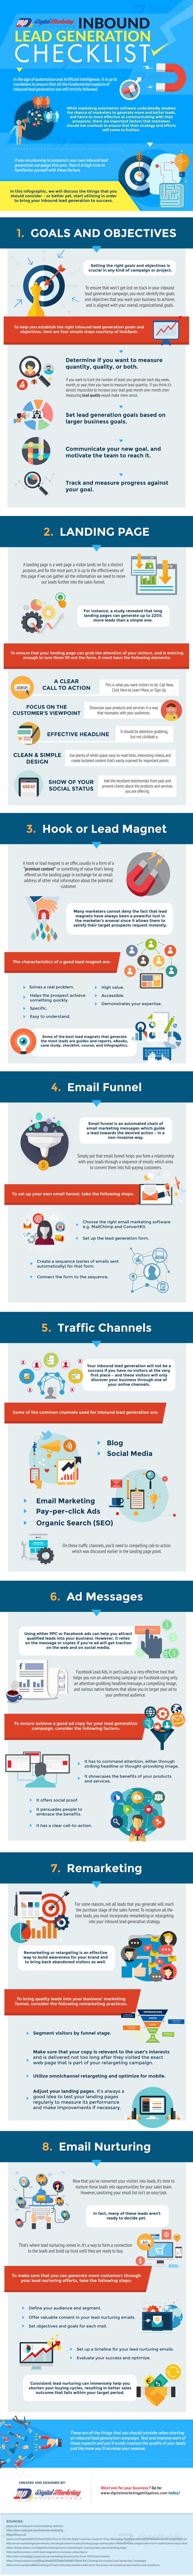 Inbound Lead Generation Checklist (Infographic) - An Infographic from Digital Marketing Philippines